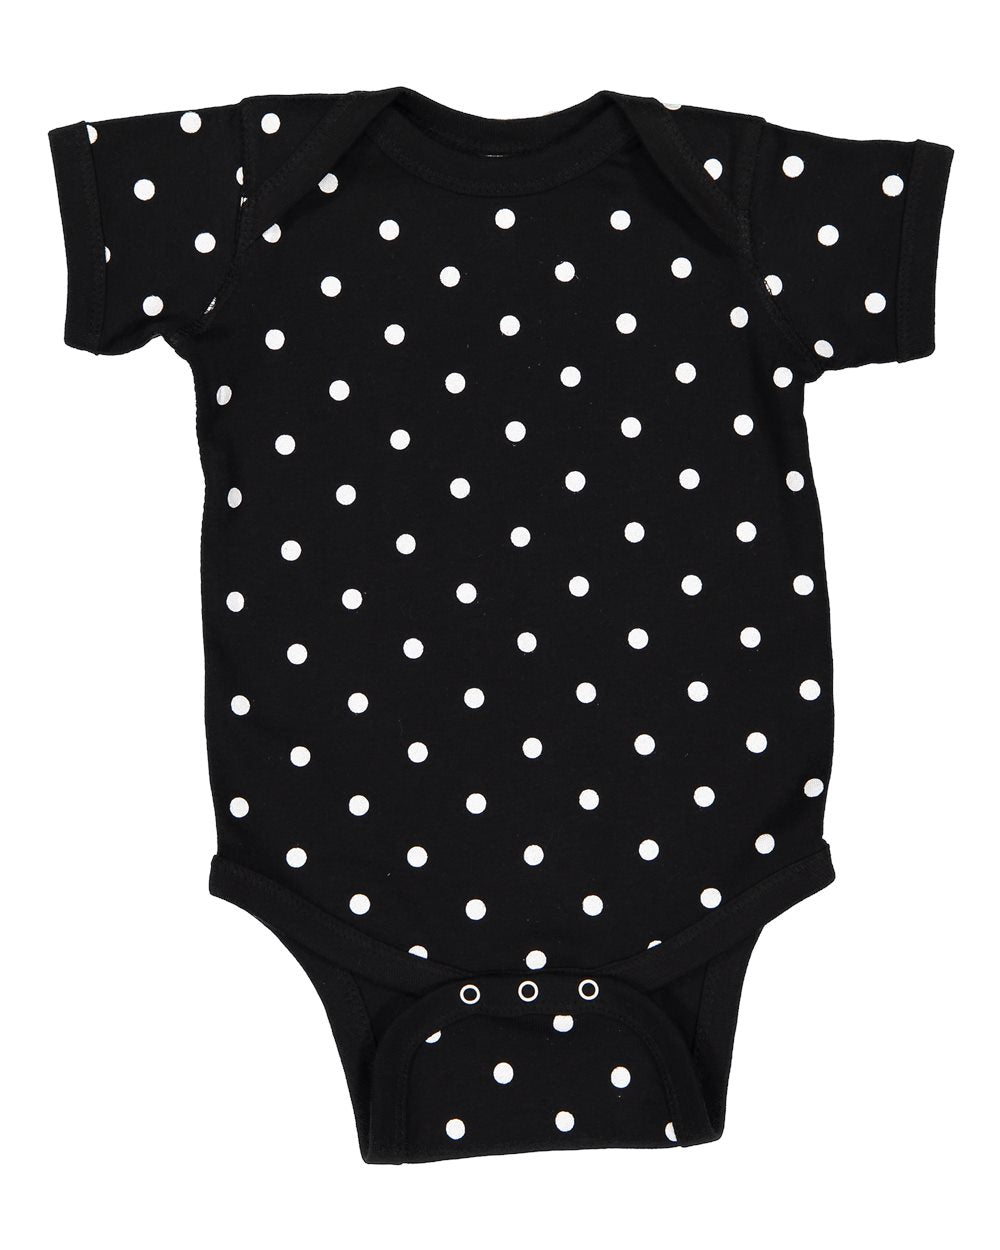 Rabbit Skin Baby Bodysuit 4400 Black-White Dot